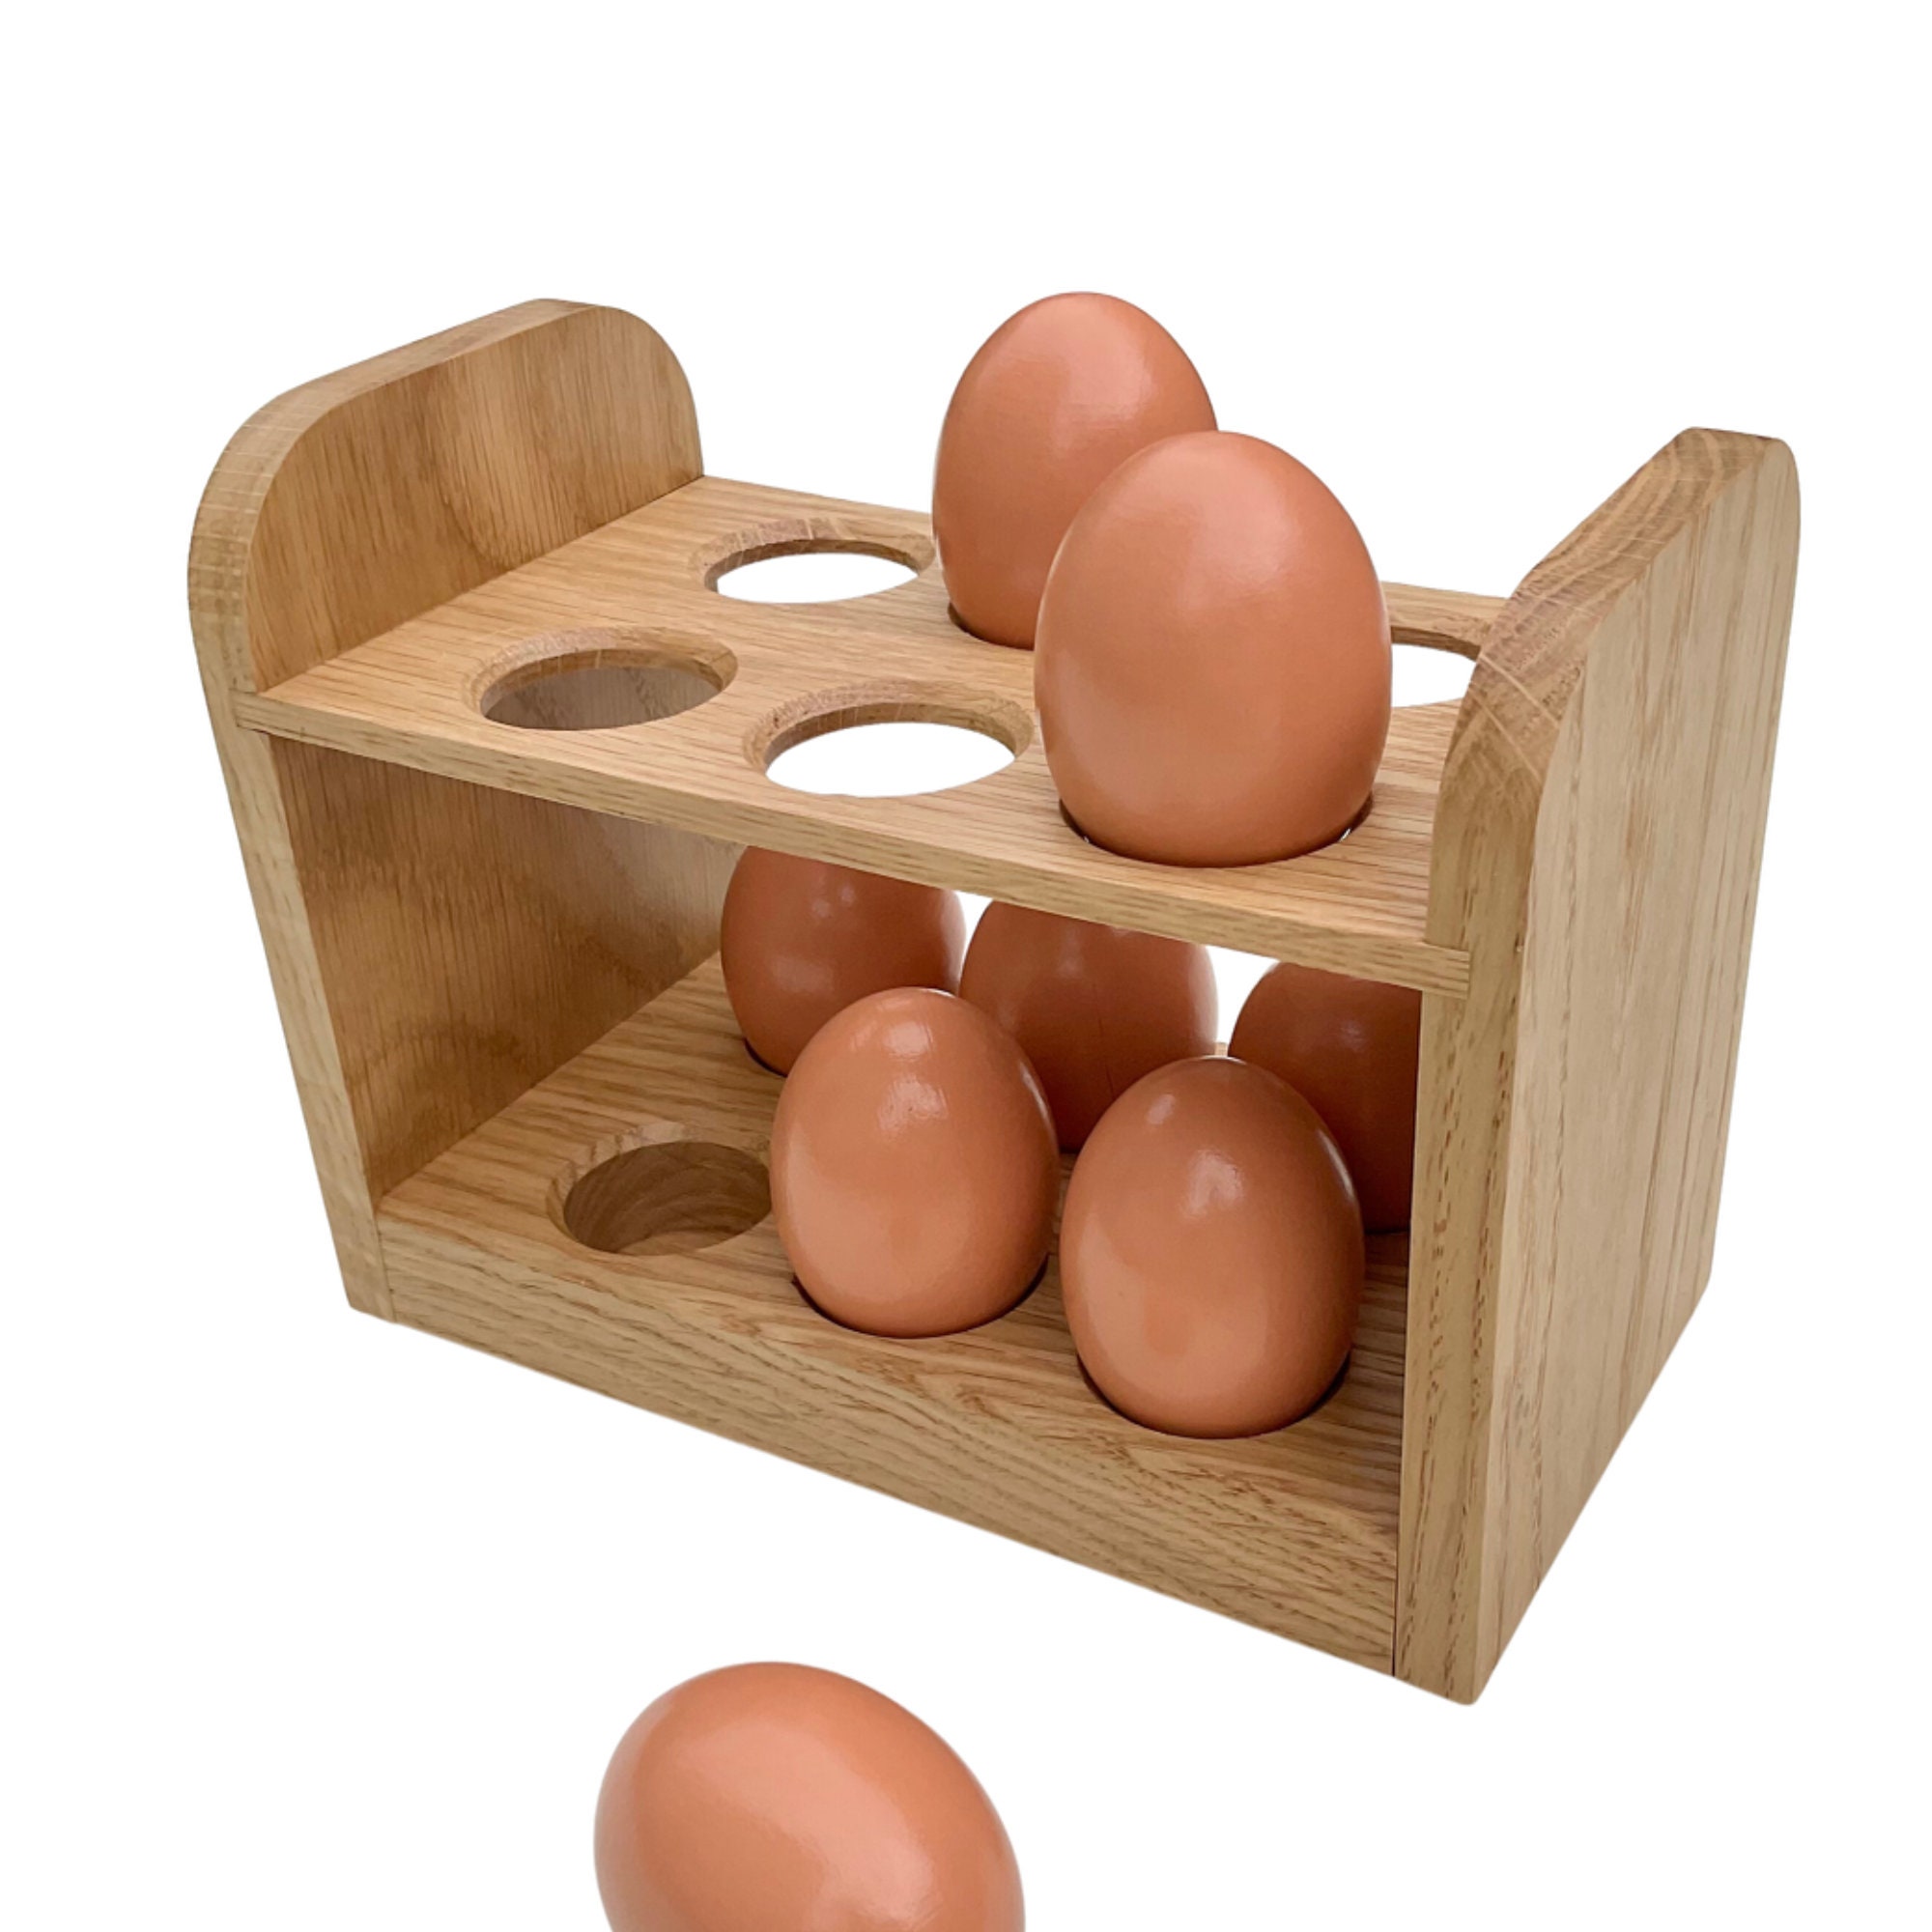 Chicken Counter Top Egg Holder-17 Eggs 